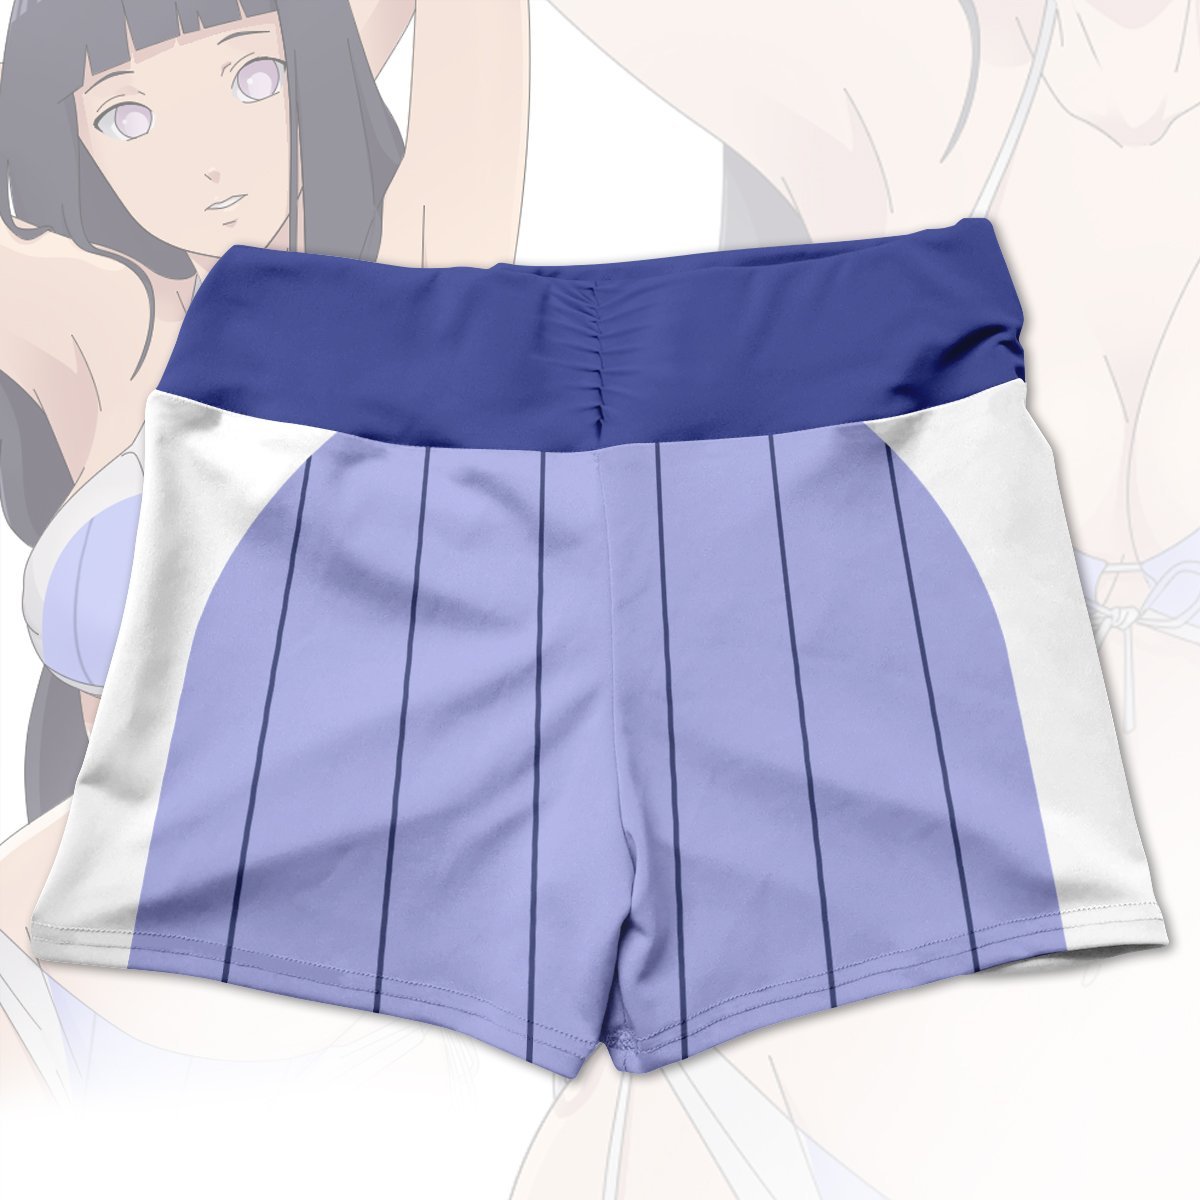 hinata summer active wear set 956066 - Anime Swimsuits